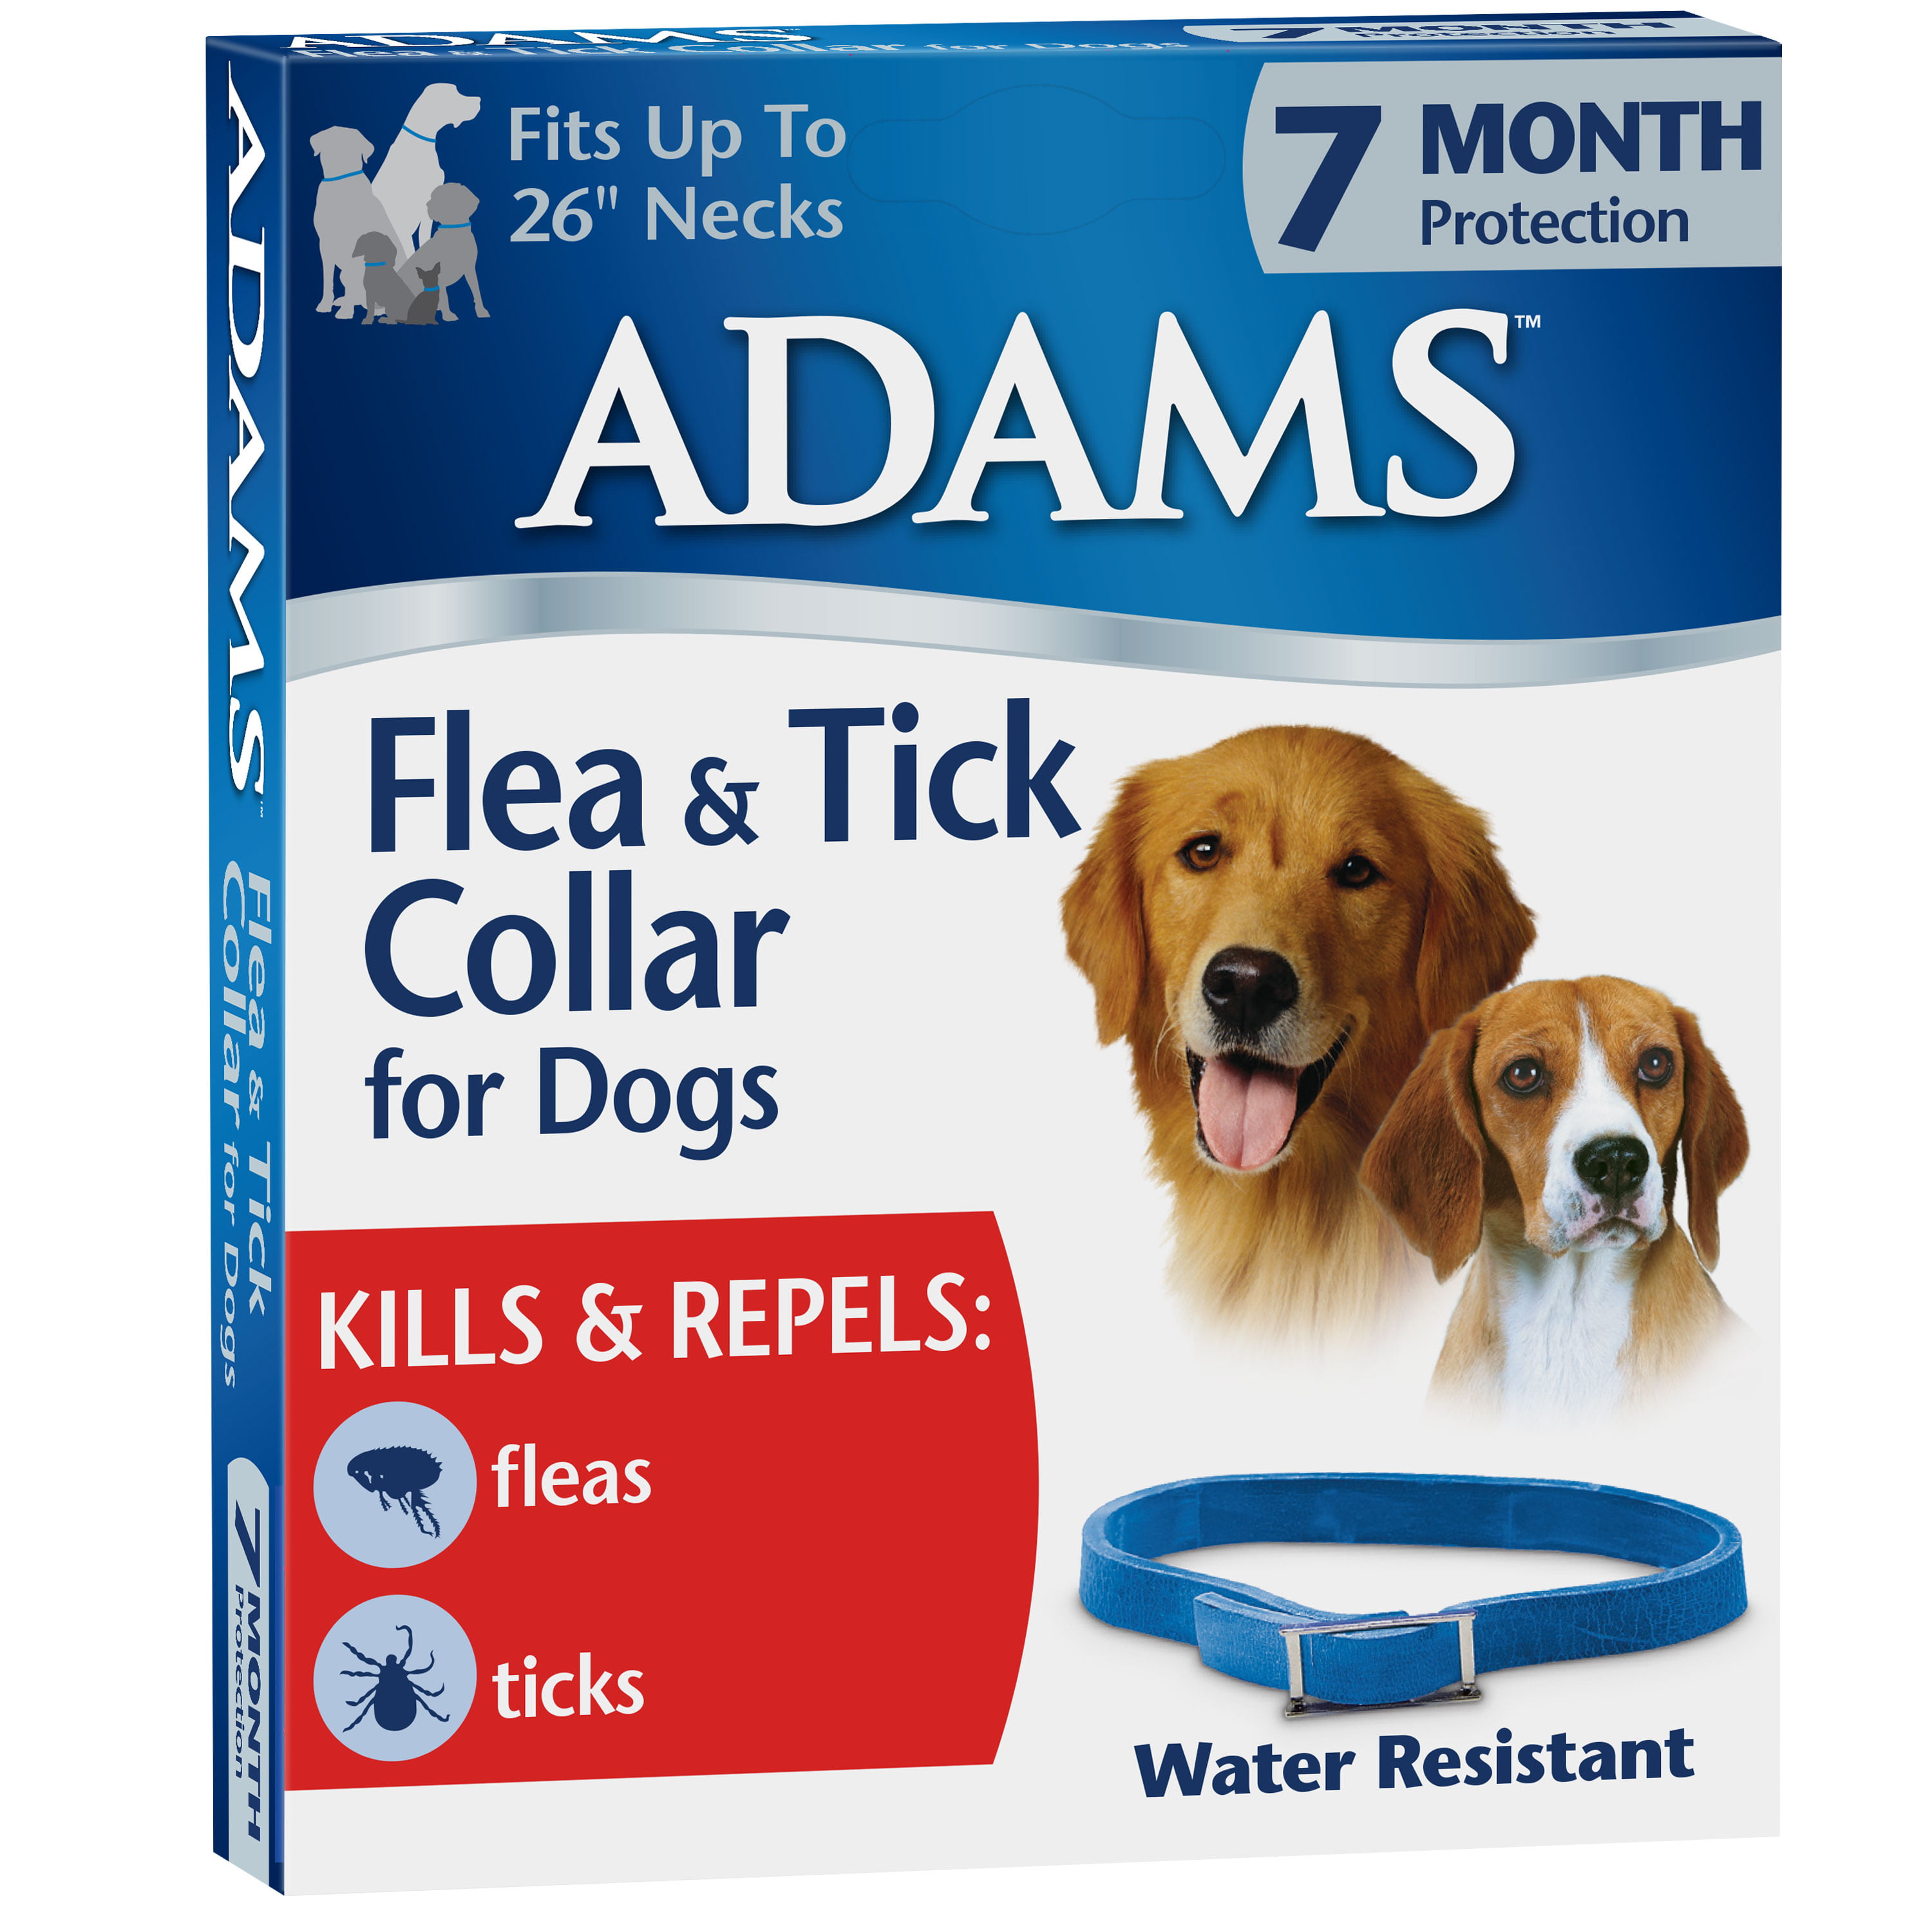 flea collar for puppies walmart